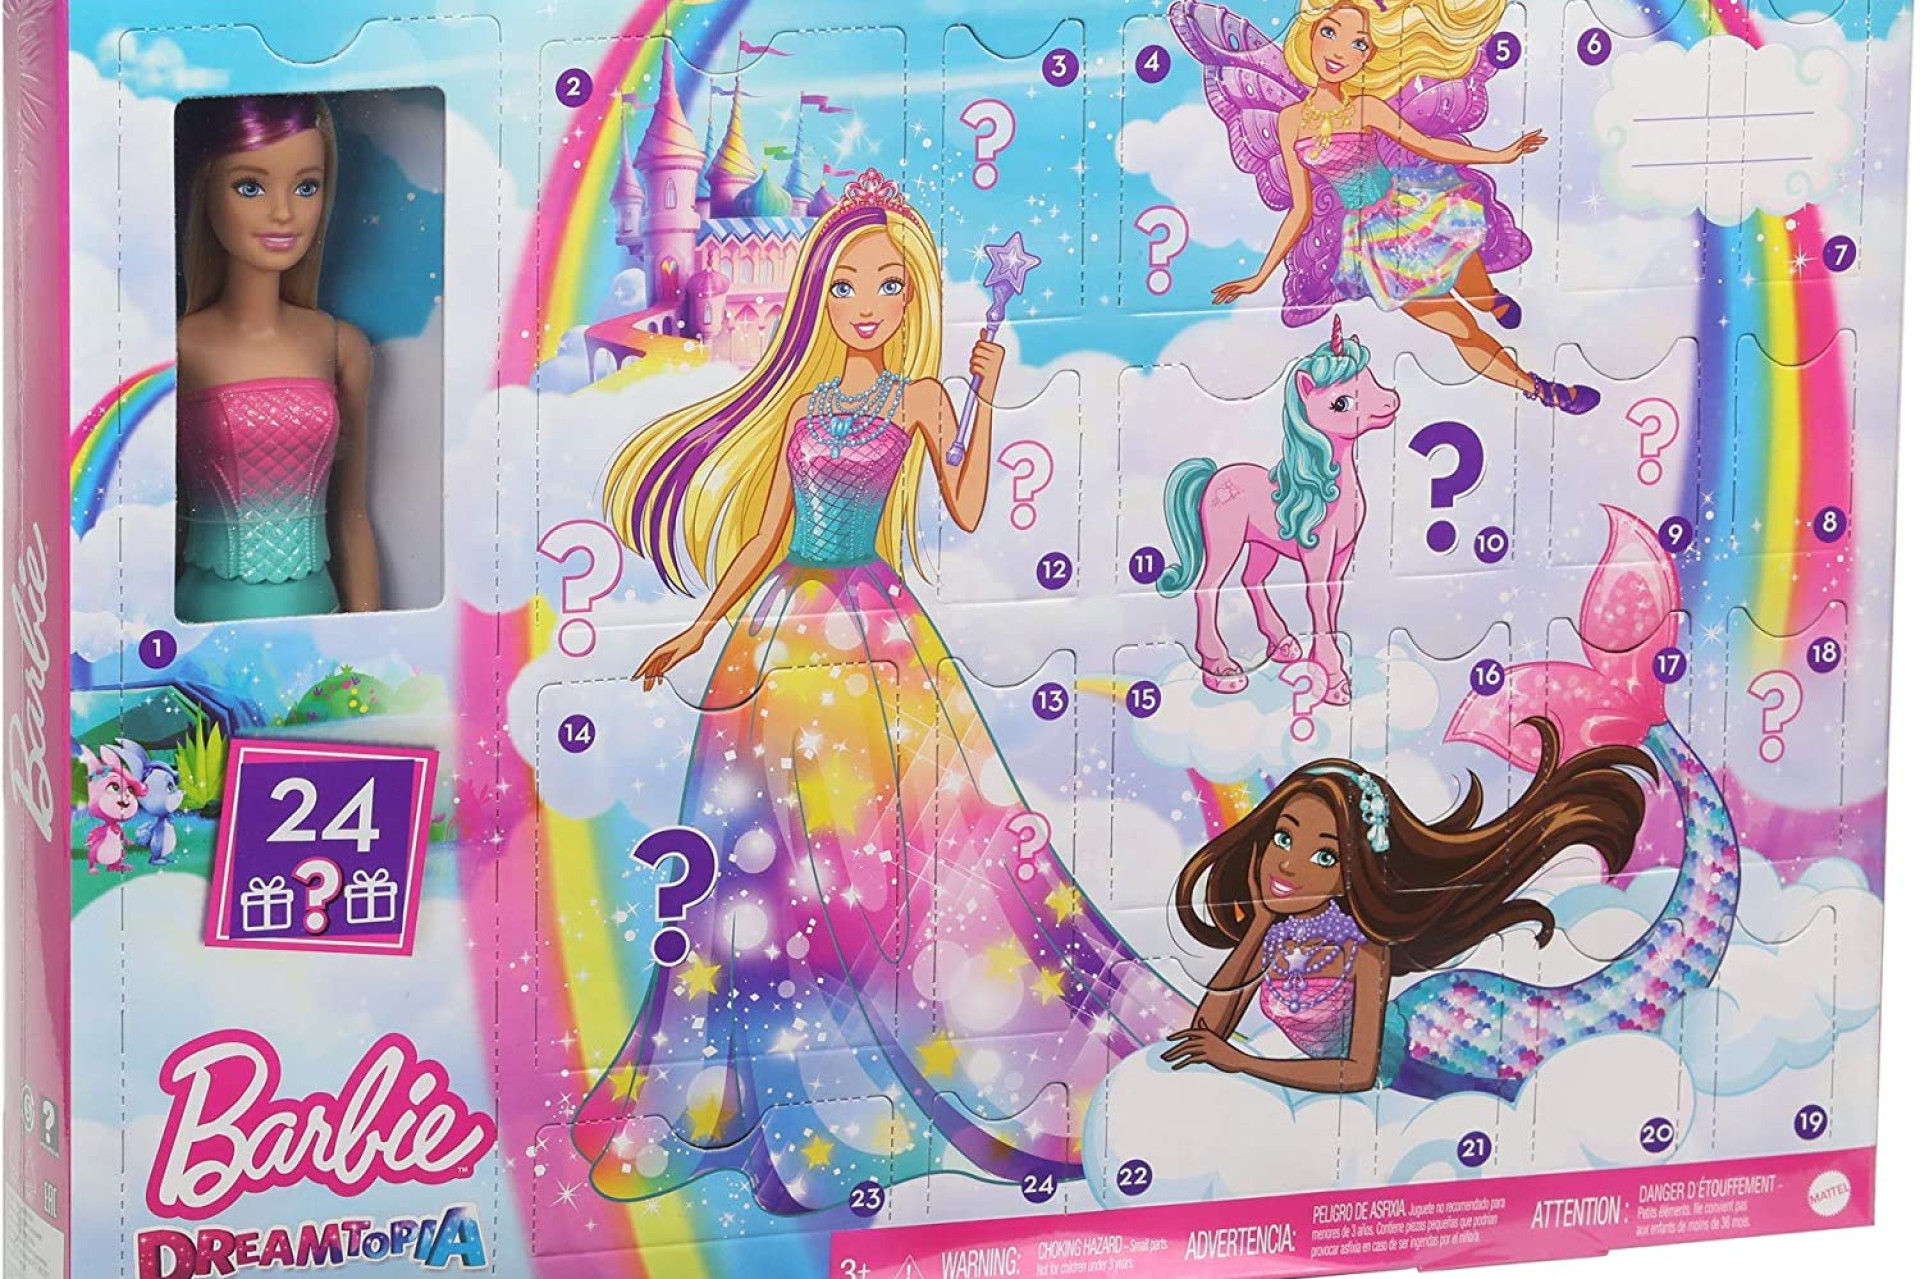 Acheter Barbie Calendrier de l’Avent Dreamtopia